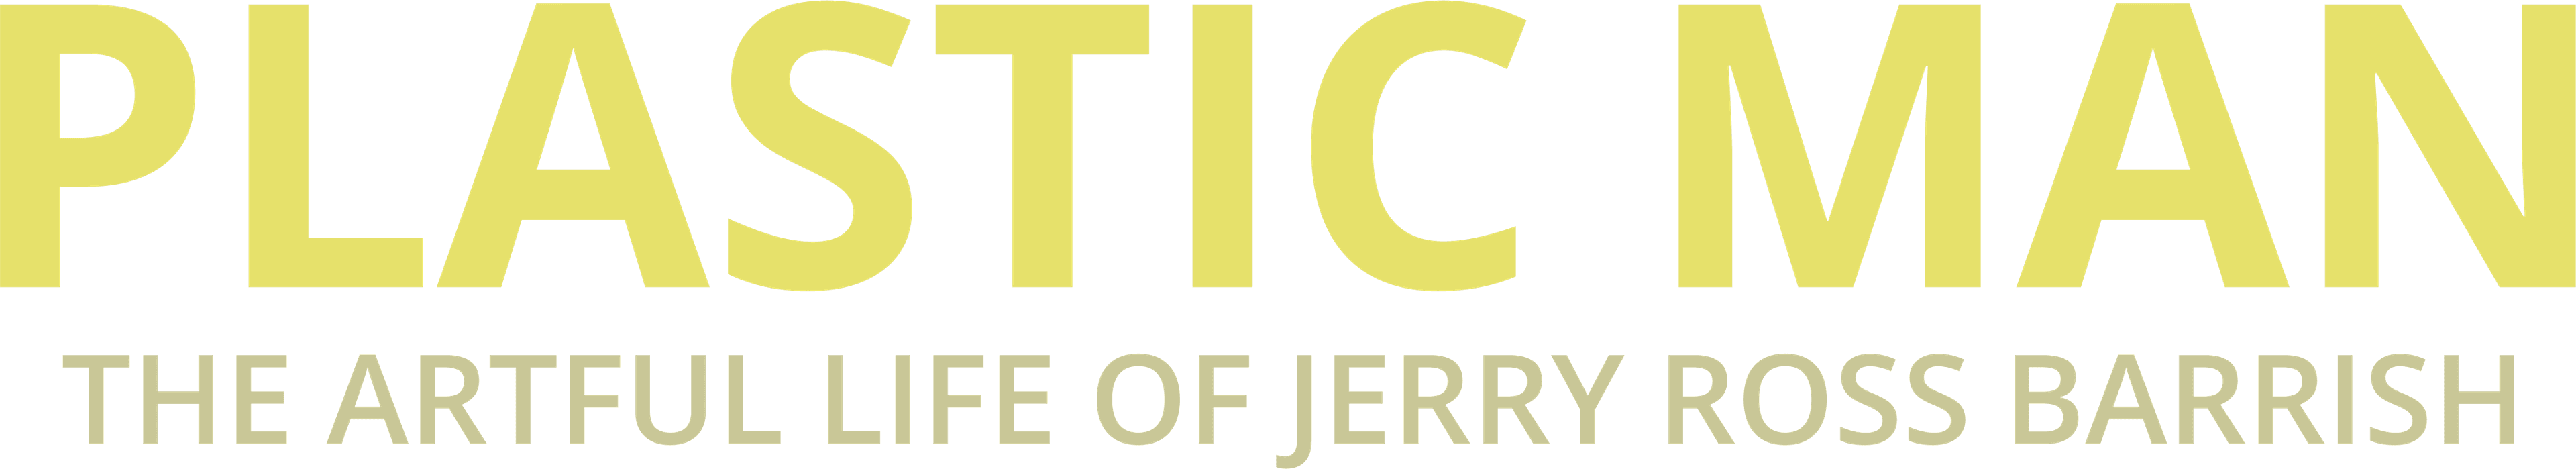 Plastic Man: The Artful Life of Jerry Ross Barrish logo